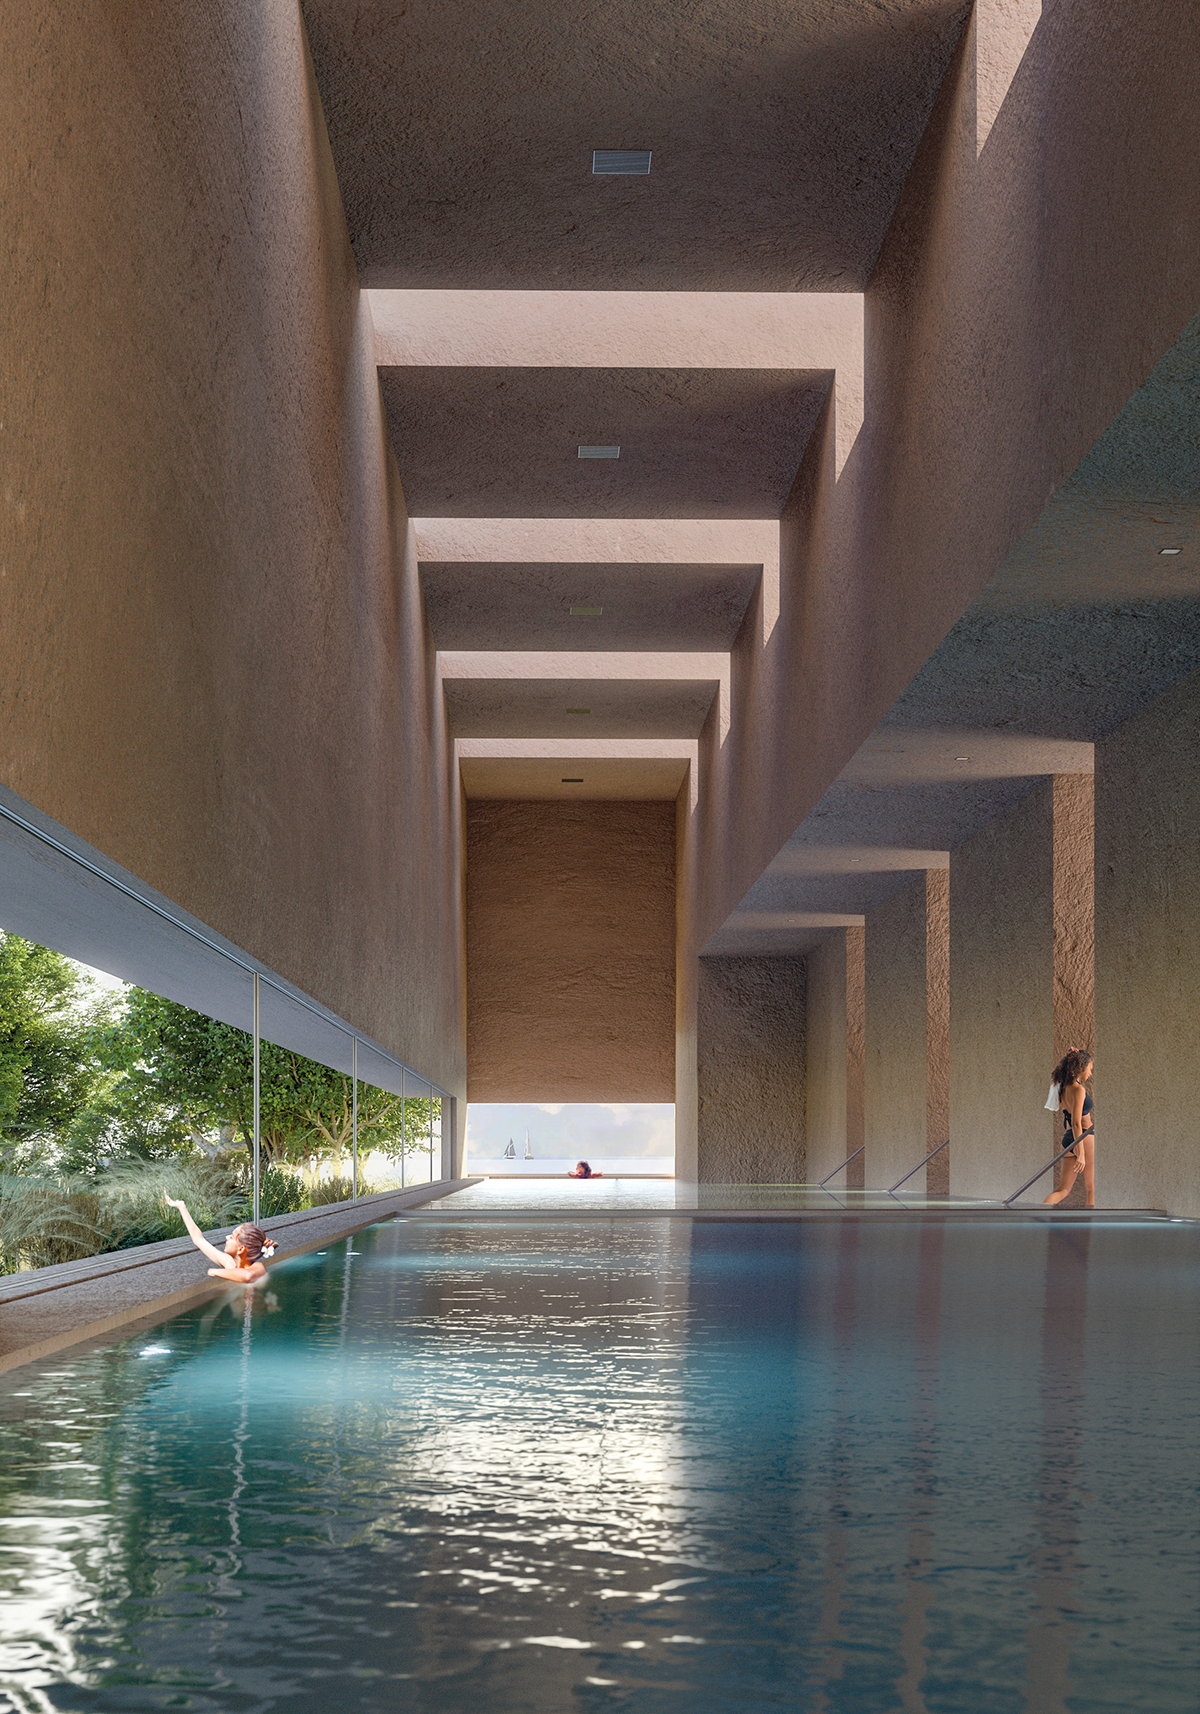 Archisearch Εξαγορά της πρότασης των Nysa Architects για τον πρόσφατο Πανελλήνιο Αρχιτεκτονικό Διαγωνισμό «Αξιοποίηση του οικοπέδου Σαρλίτζα με δημιουργία κέντρου θερμαλισμού και πολιτιστικού συγκροτήματος»